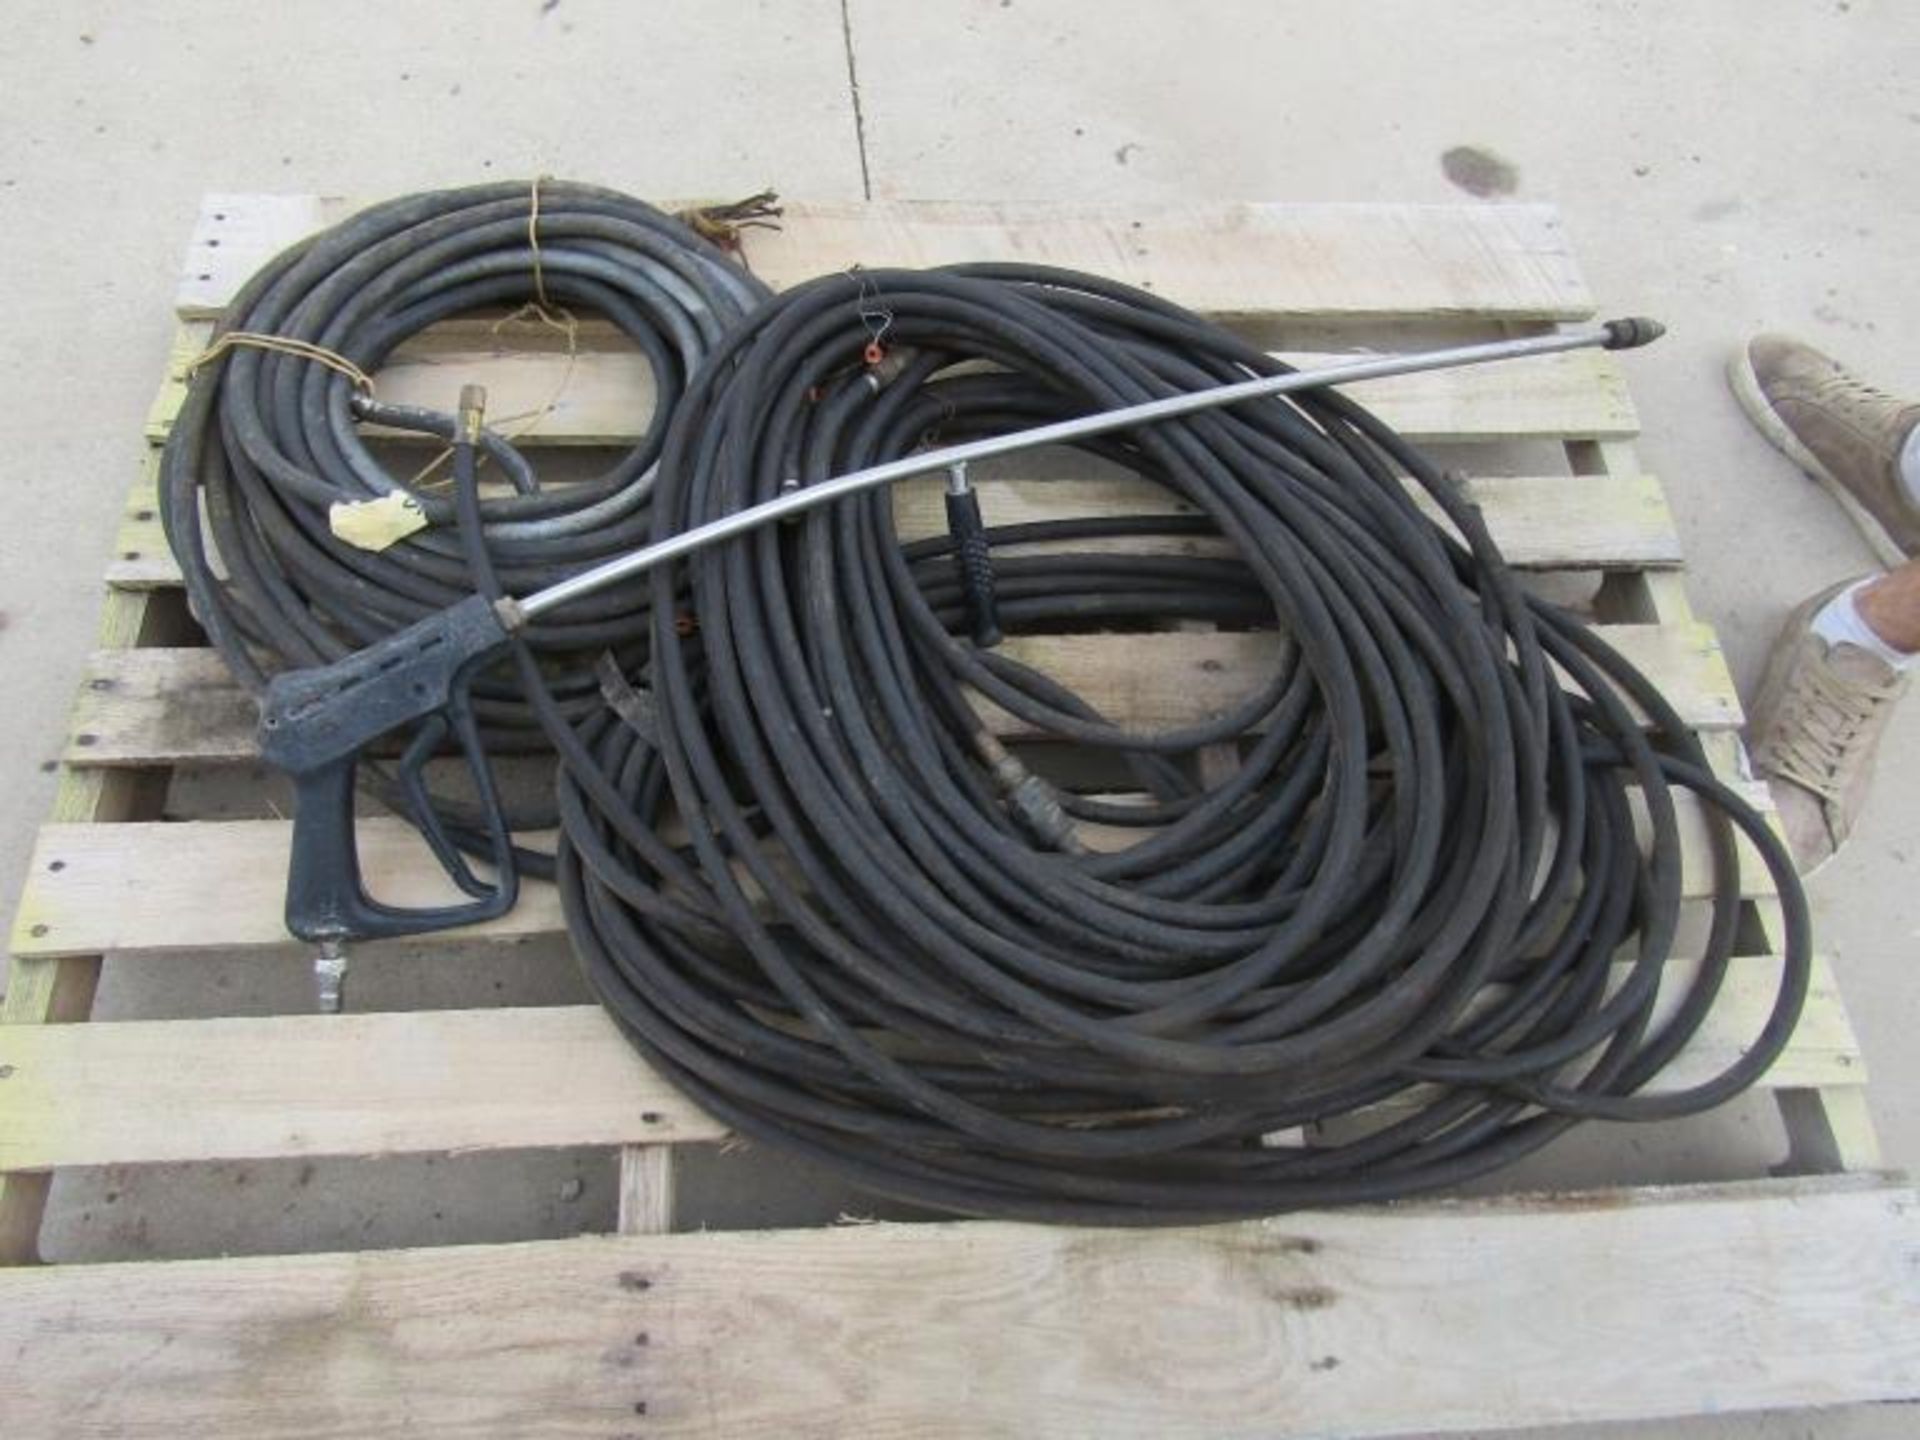 Pallet of pressure washer gun & hoses